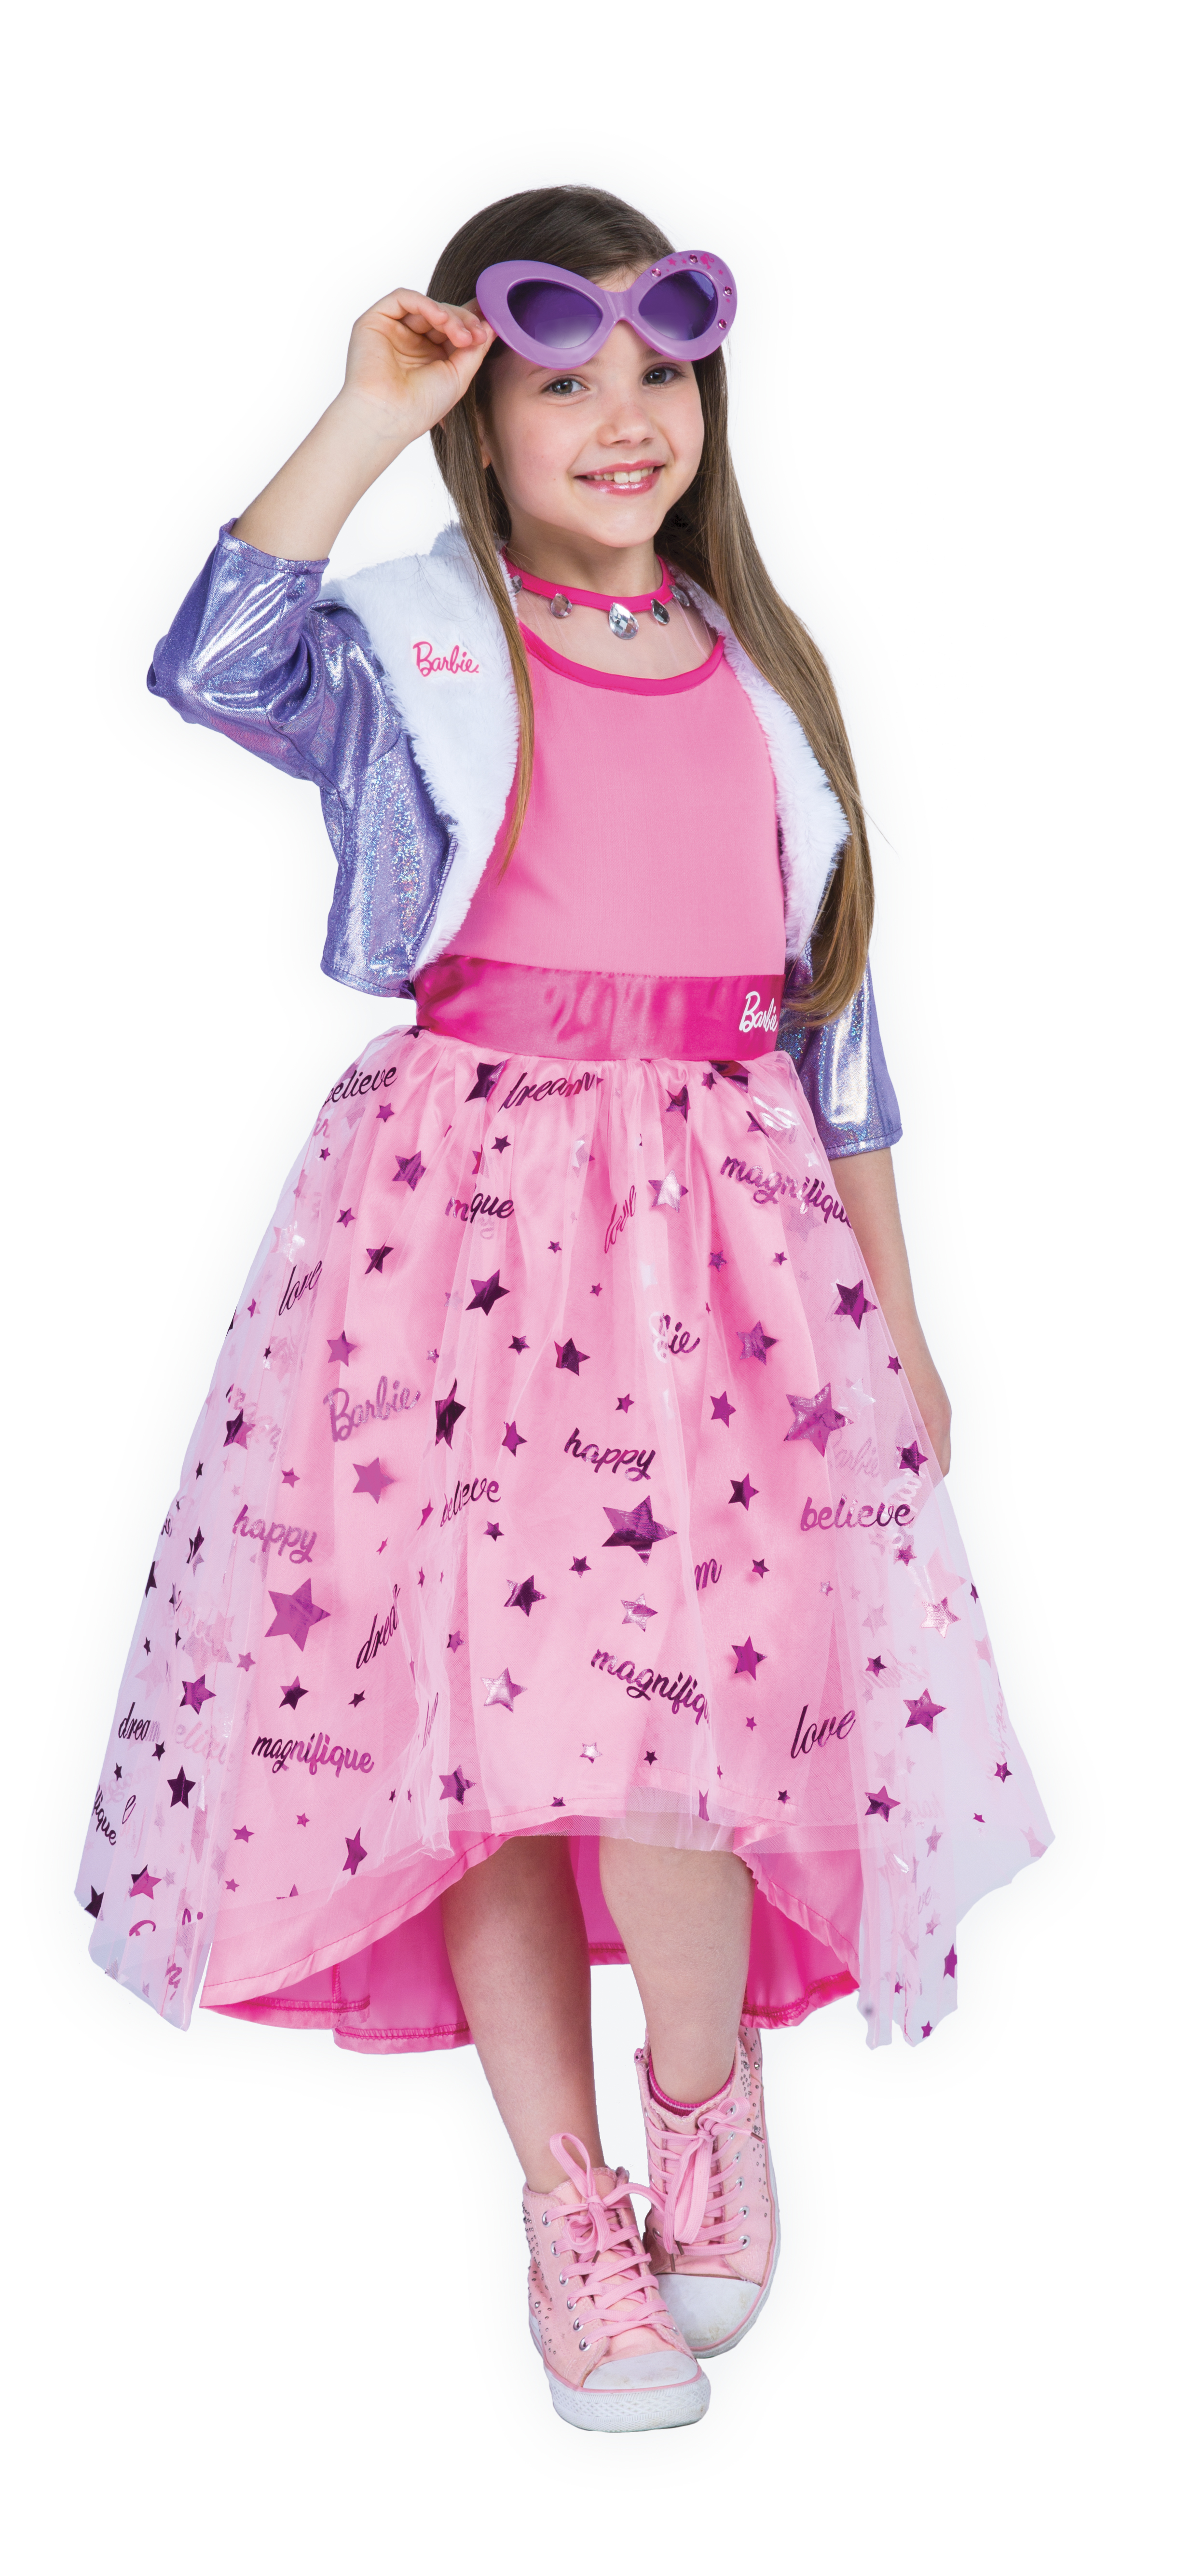 apotheker Kraan alledaags Koop Ciao - Costume - Barbie Princess (90 cm) - Pink - 90